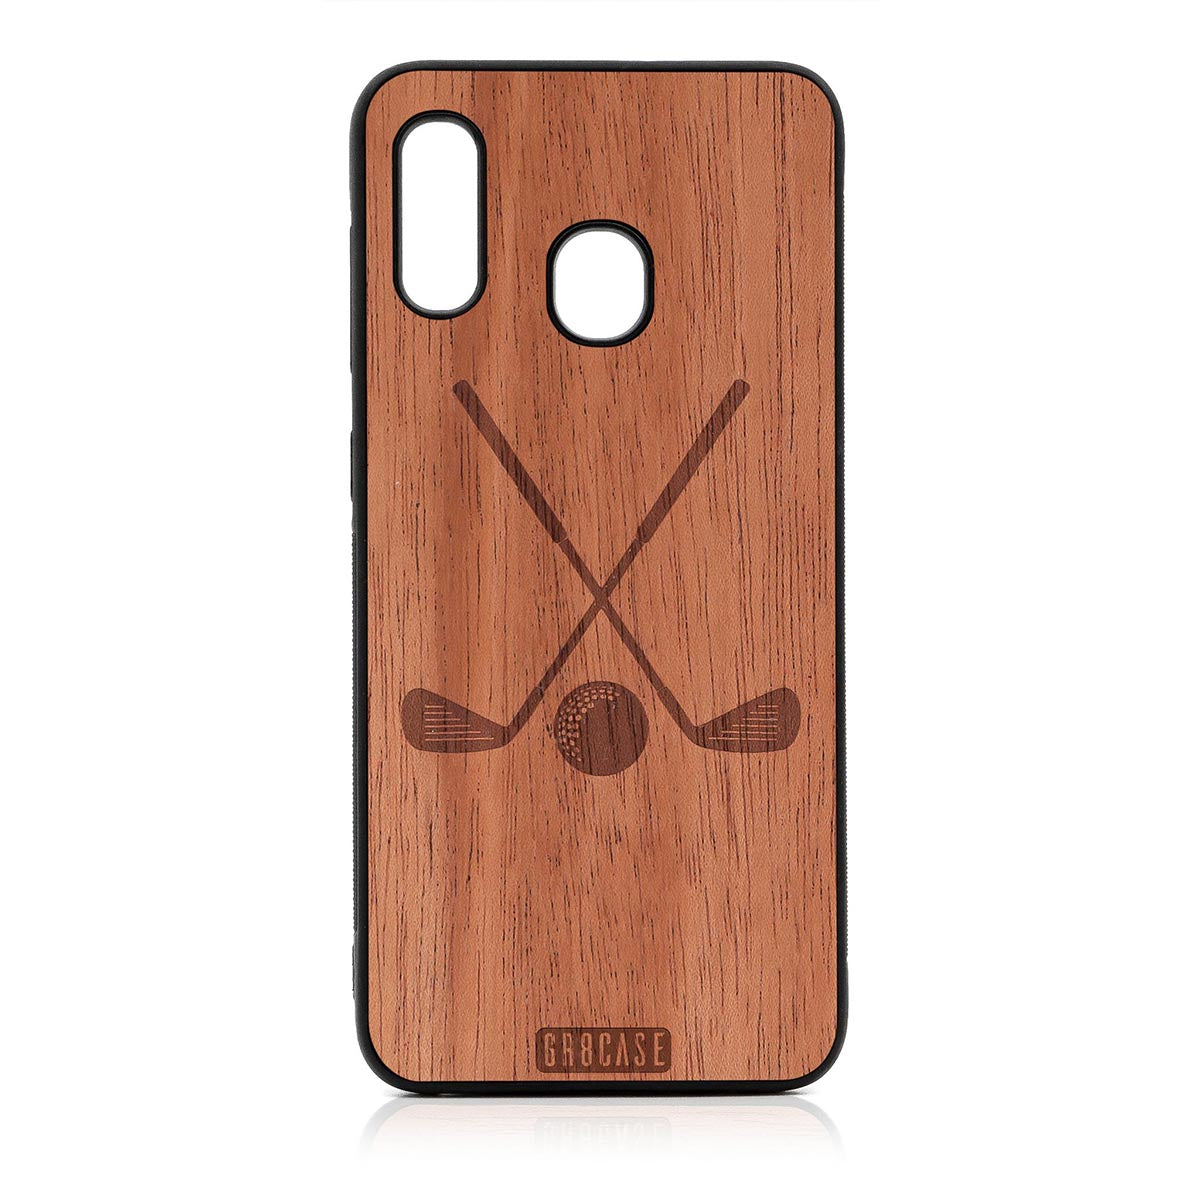 Golf Design Wood Case For Samsung Galaxy A20 by GR8CASE